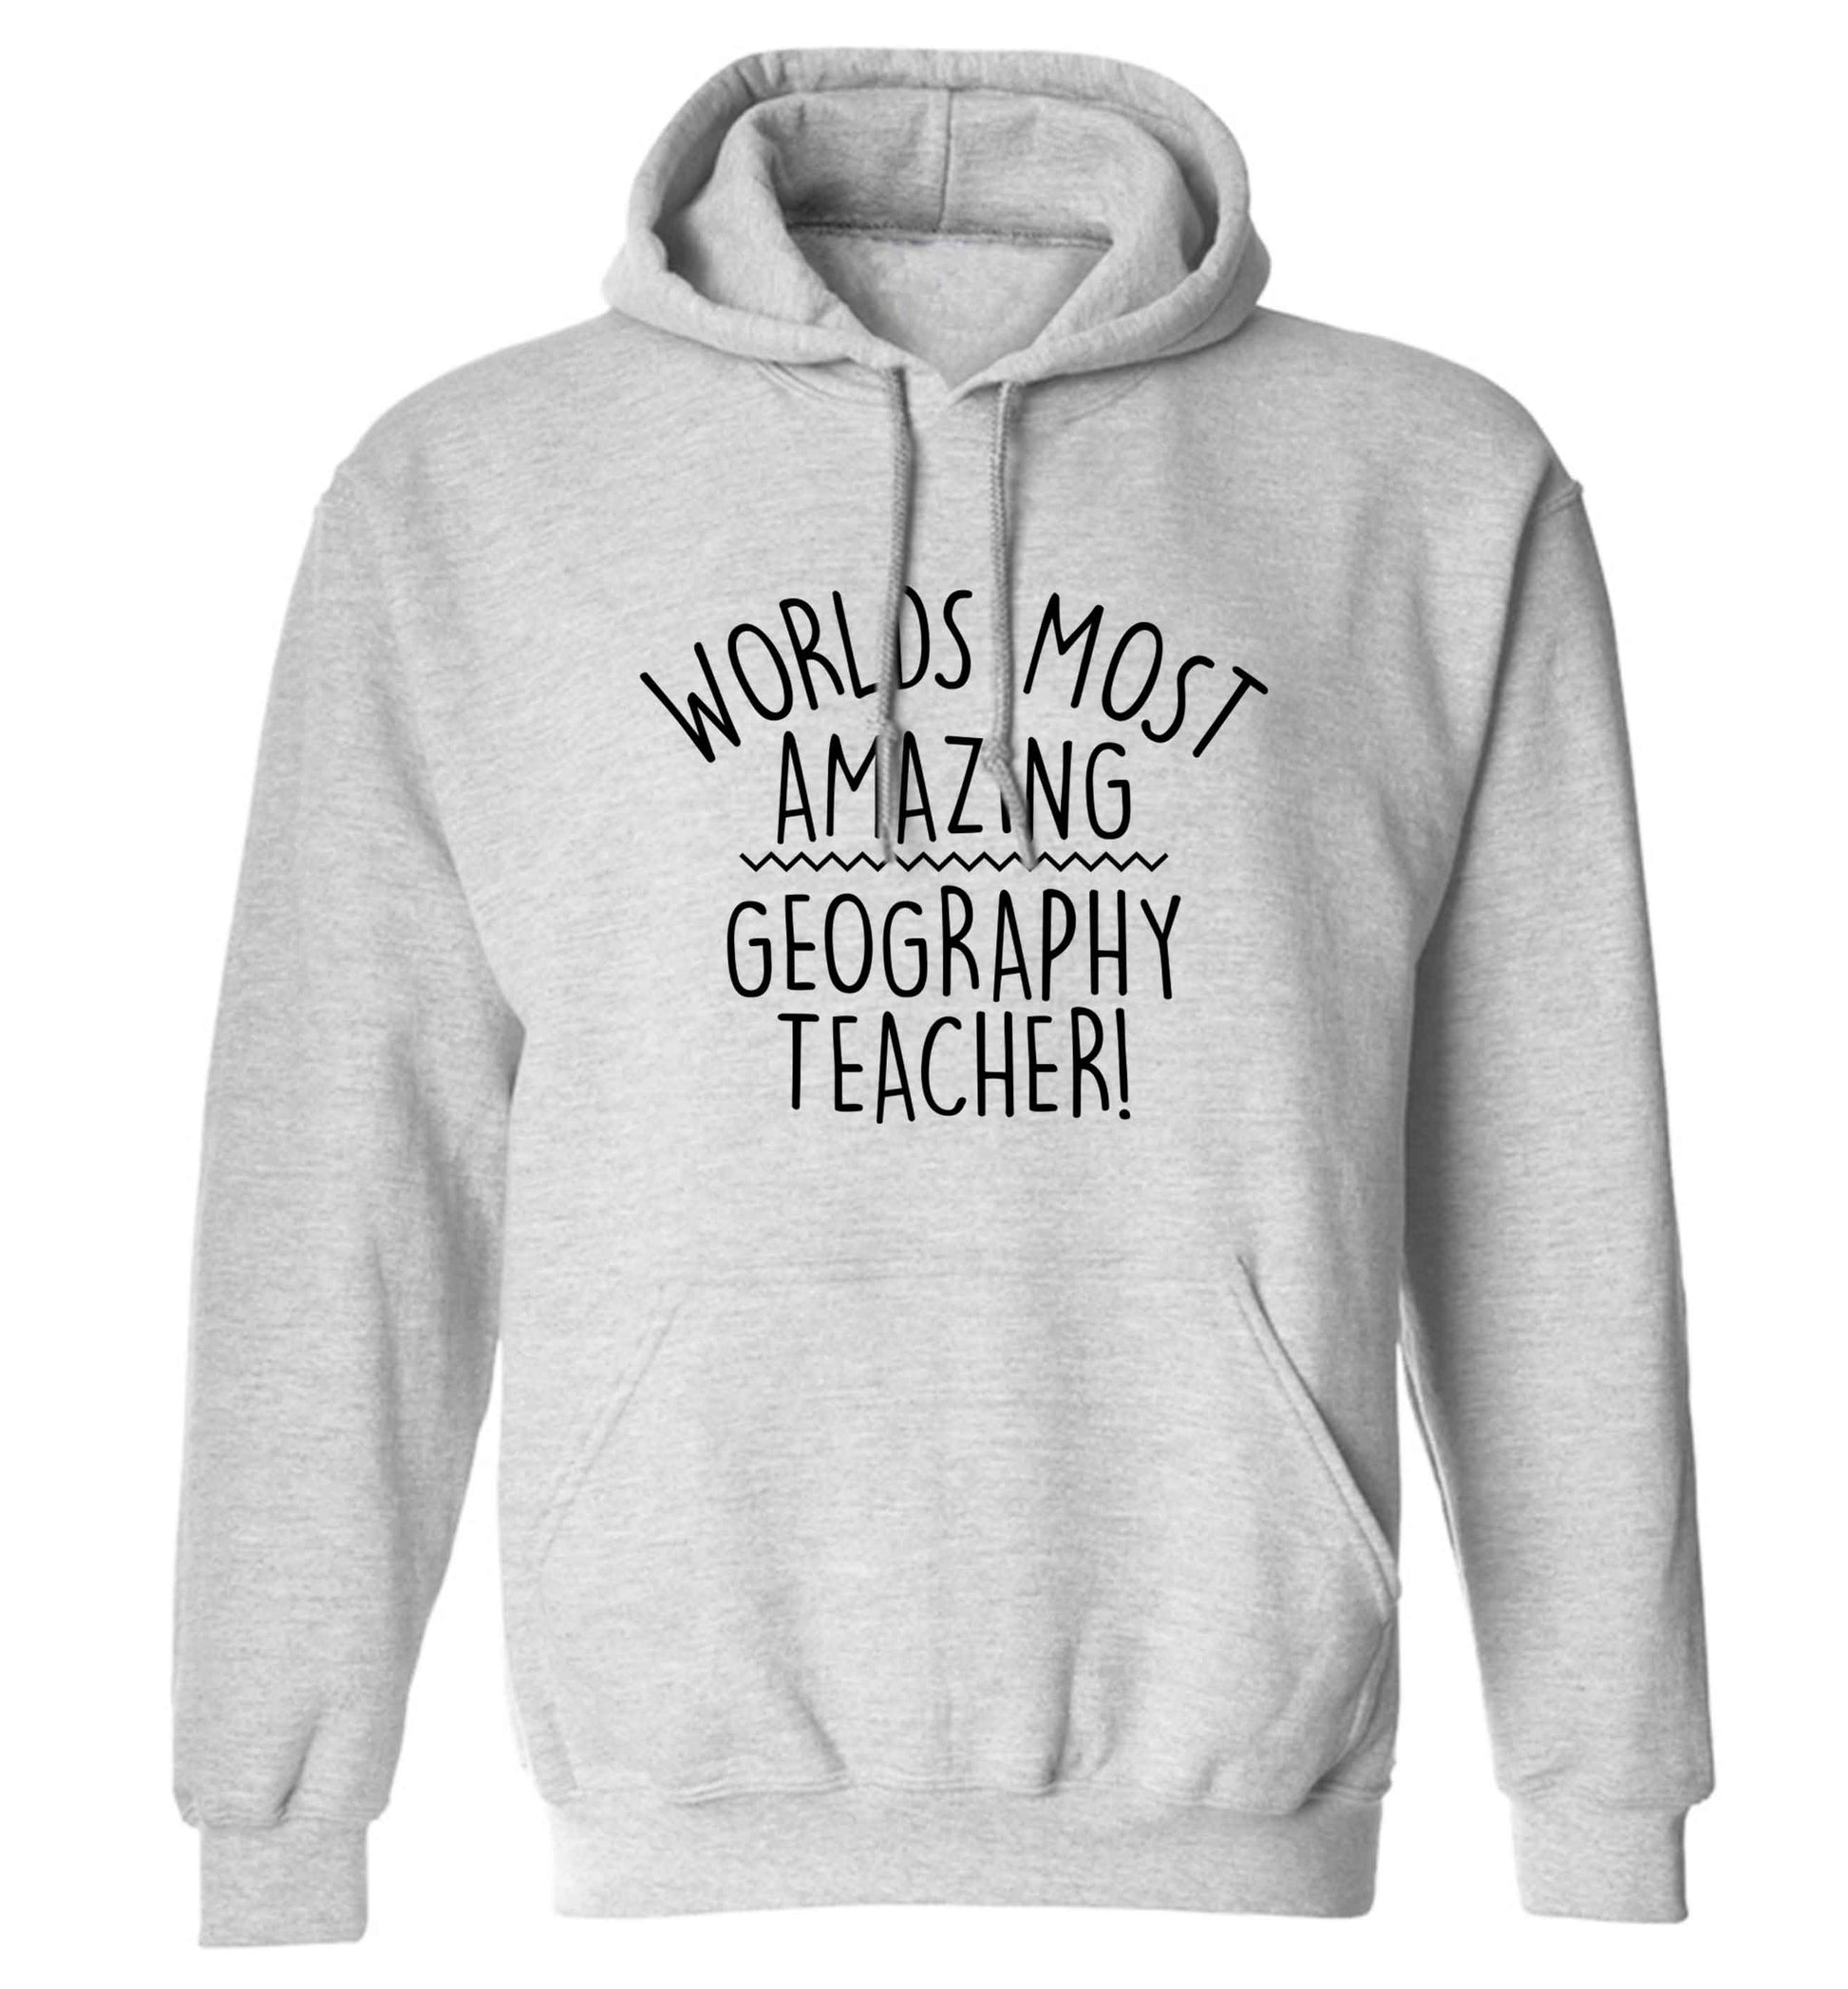 Worlds most amazing geography teacher adults unisex grey hoodie 2XL